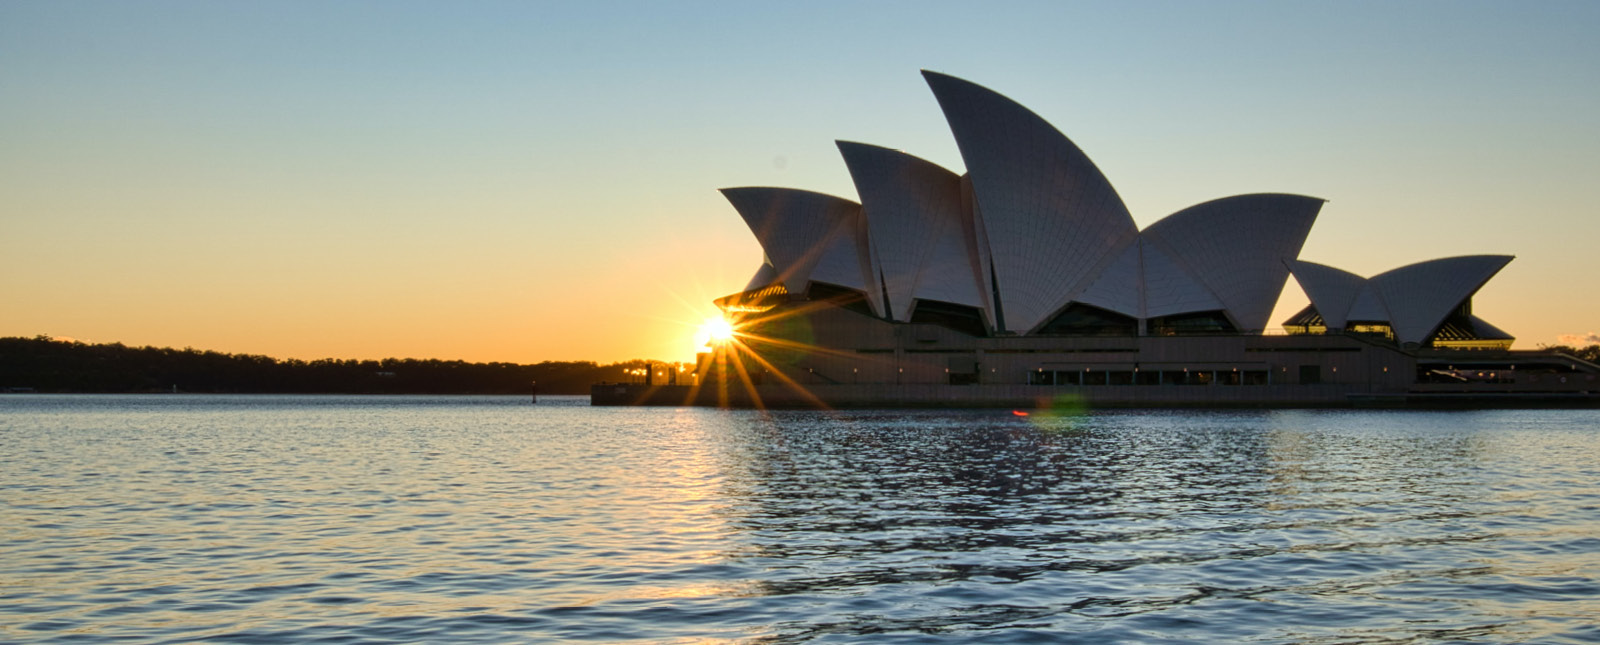 cunard cruises australia and new zealand